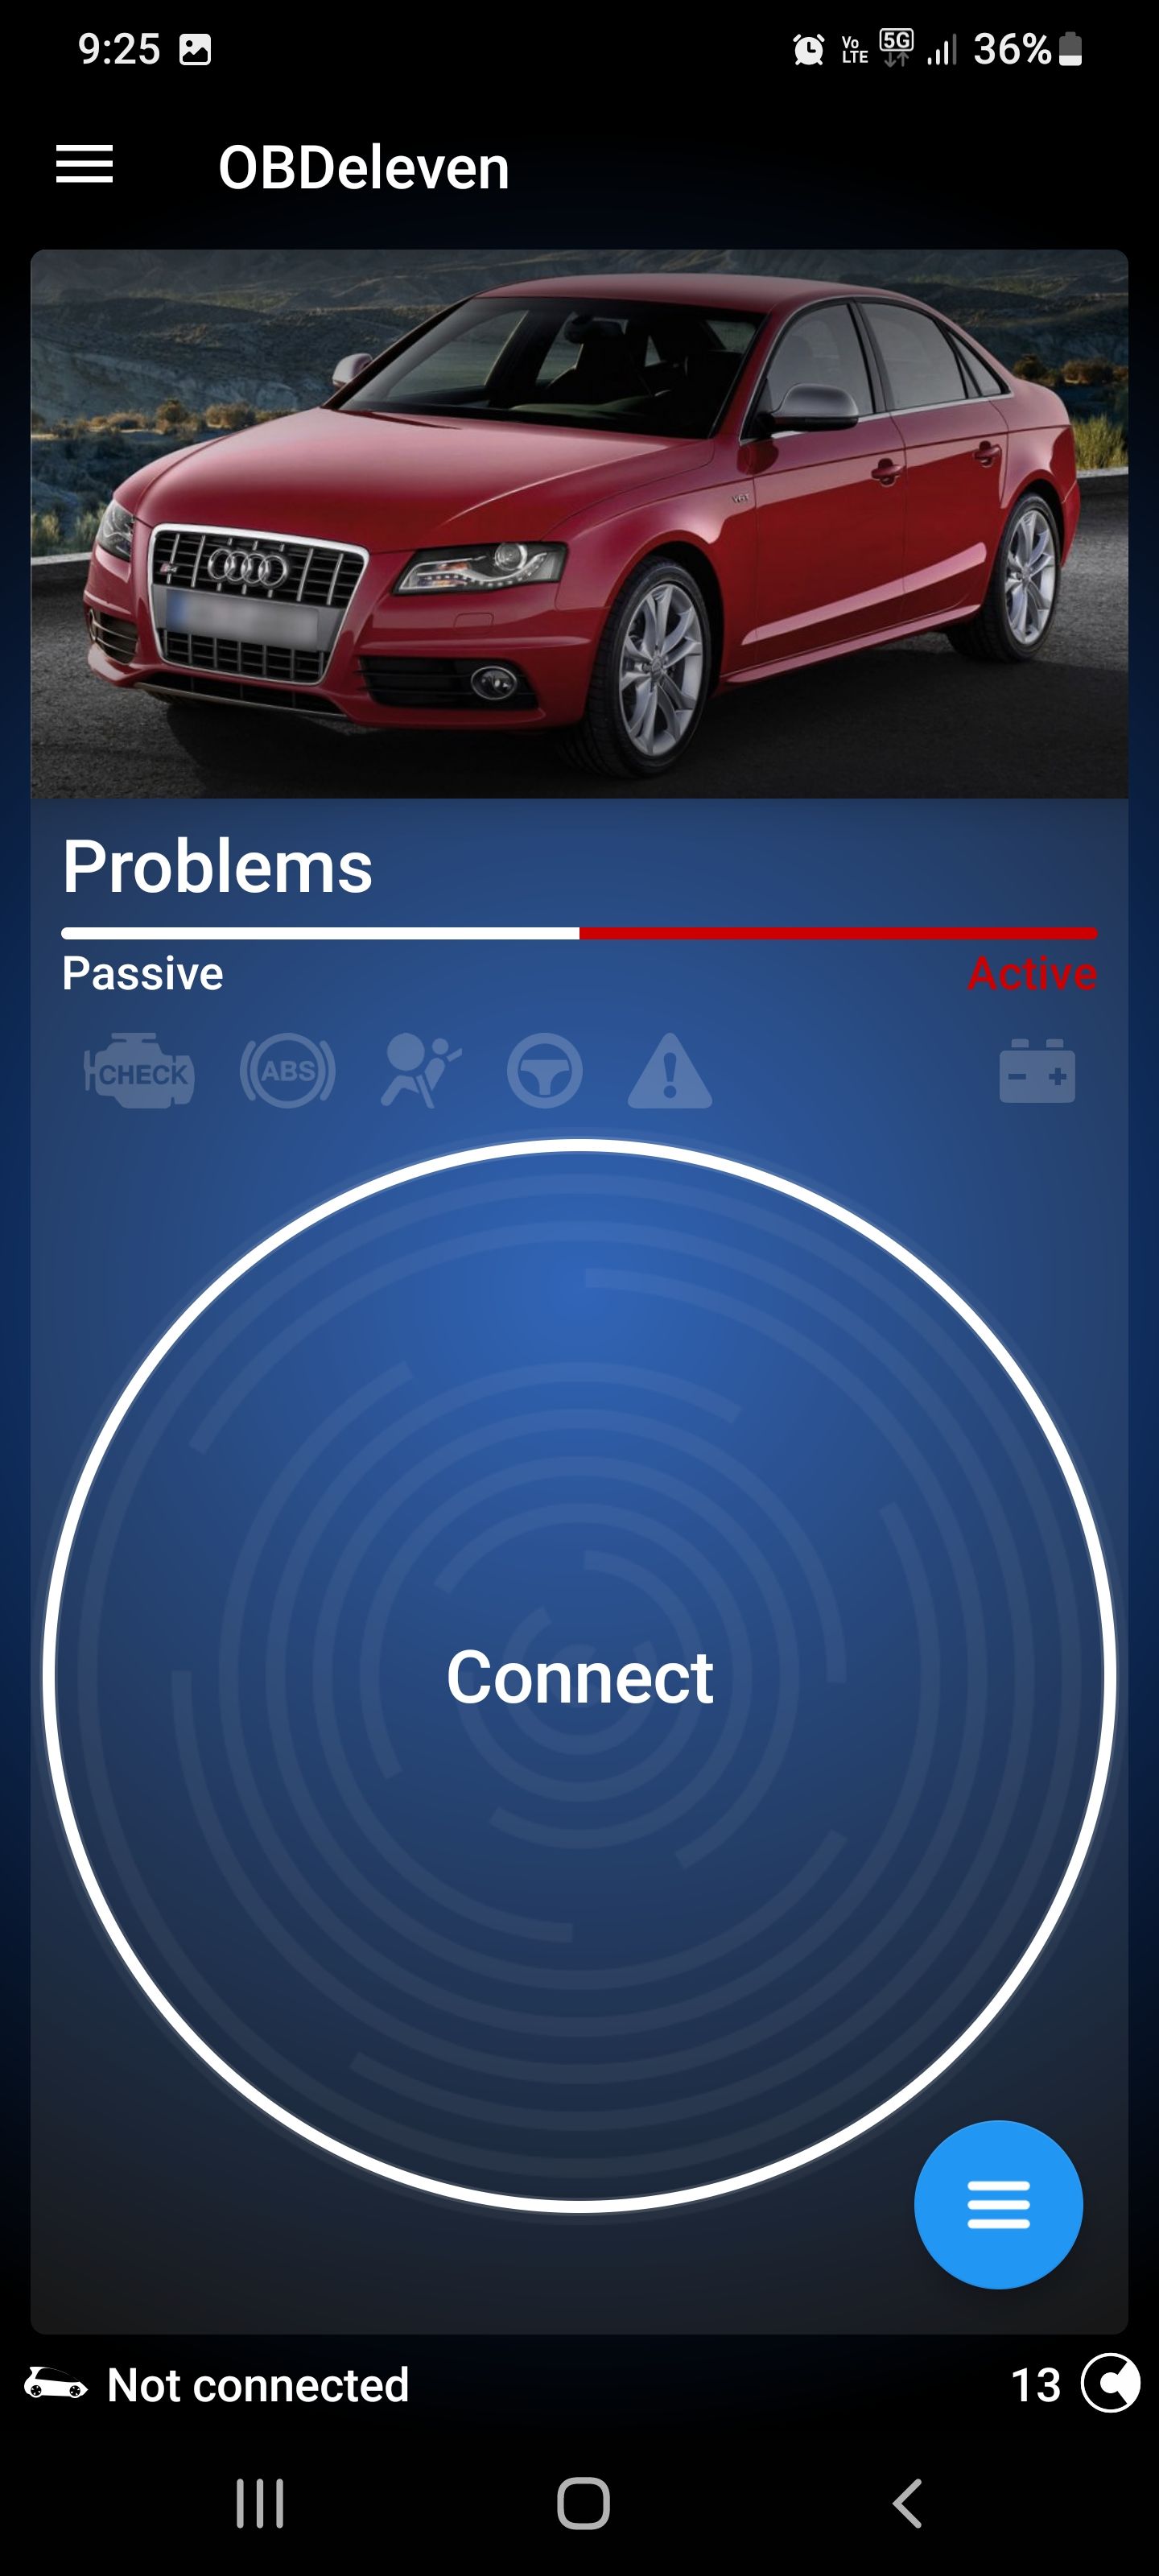 OBDeleven app screenshot showing main window